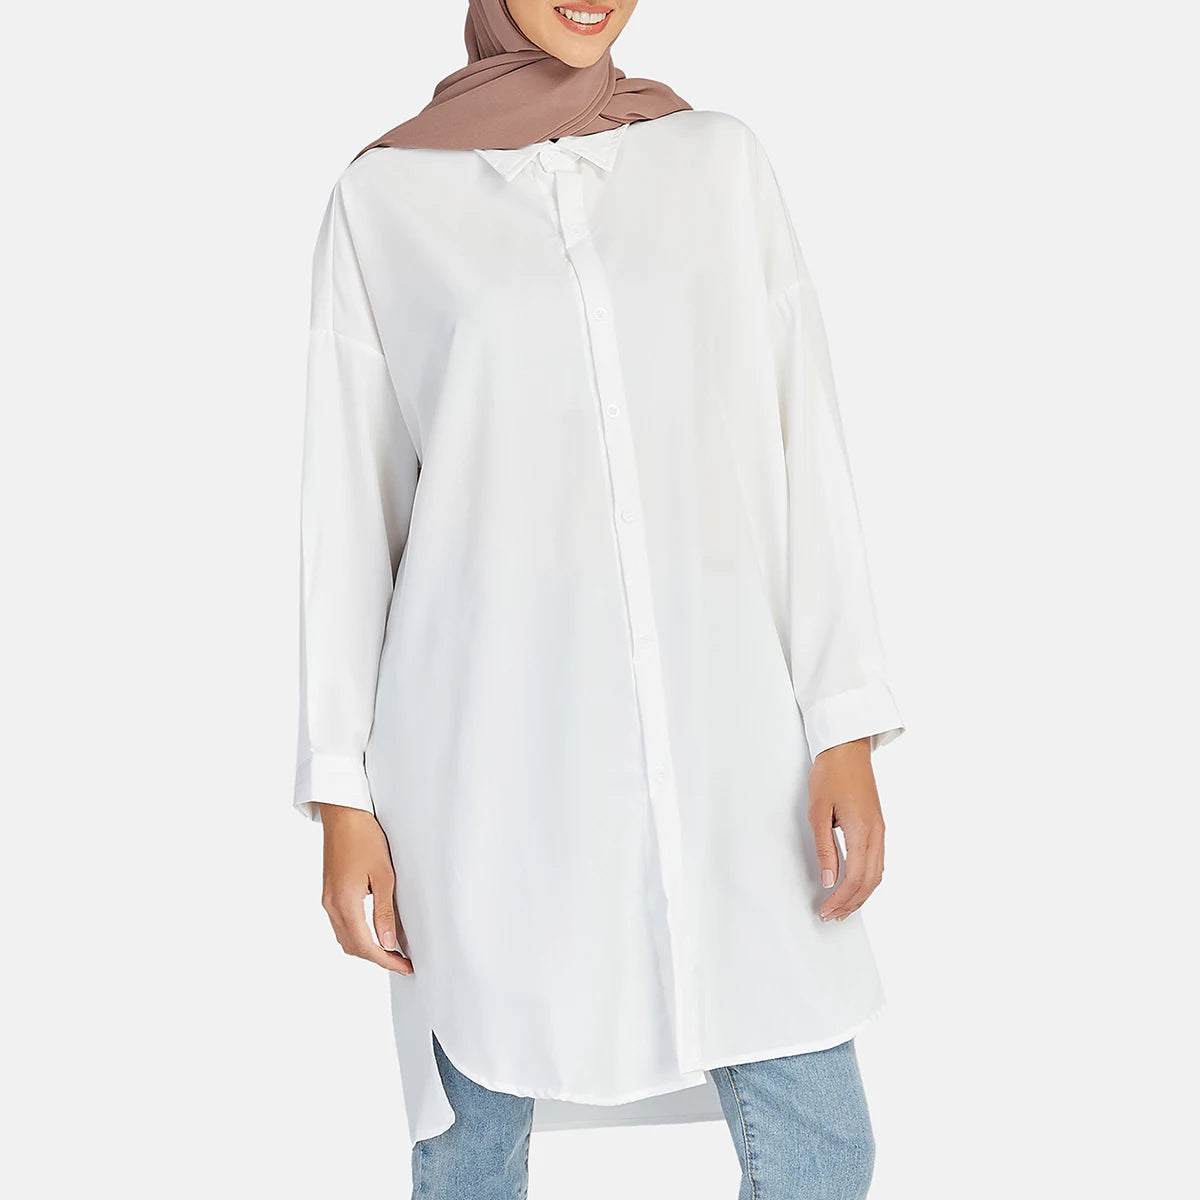 Women Fashion Tops Casual Long Sleeve Muslim Ramadan Shirts Elegant Tunic Long Blouse for Girls Blusa Feminina Black White S-5XL